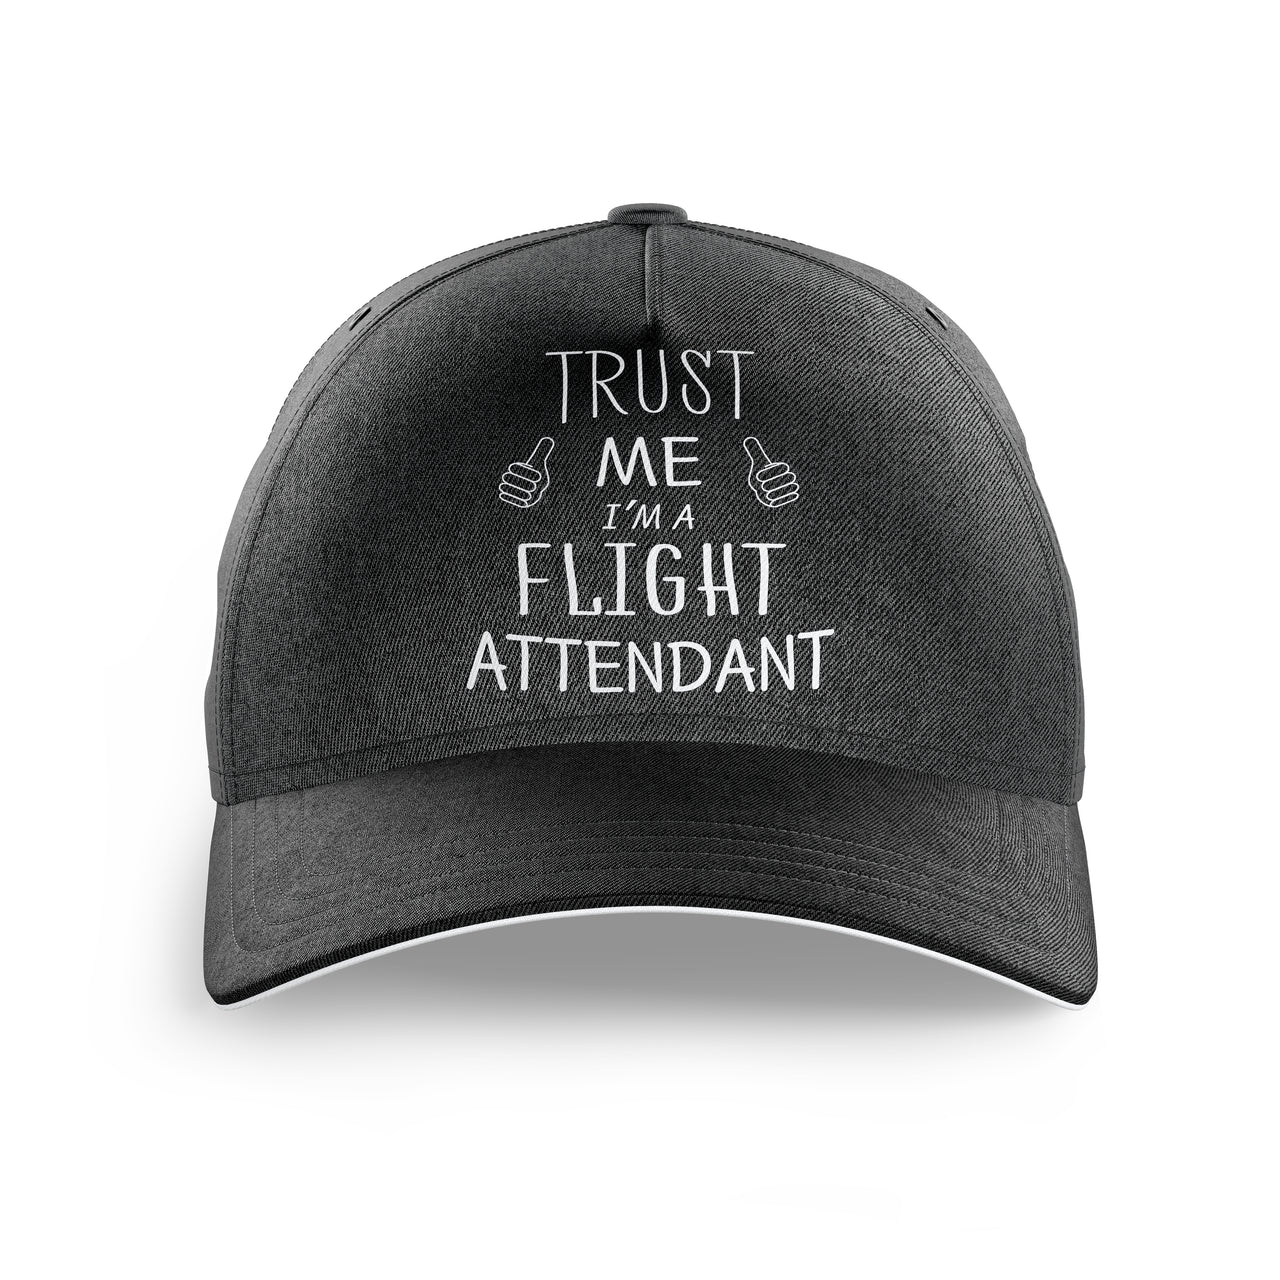 Trust Me I'm a Flight Attendant Printed Hats